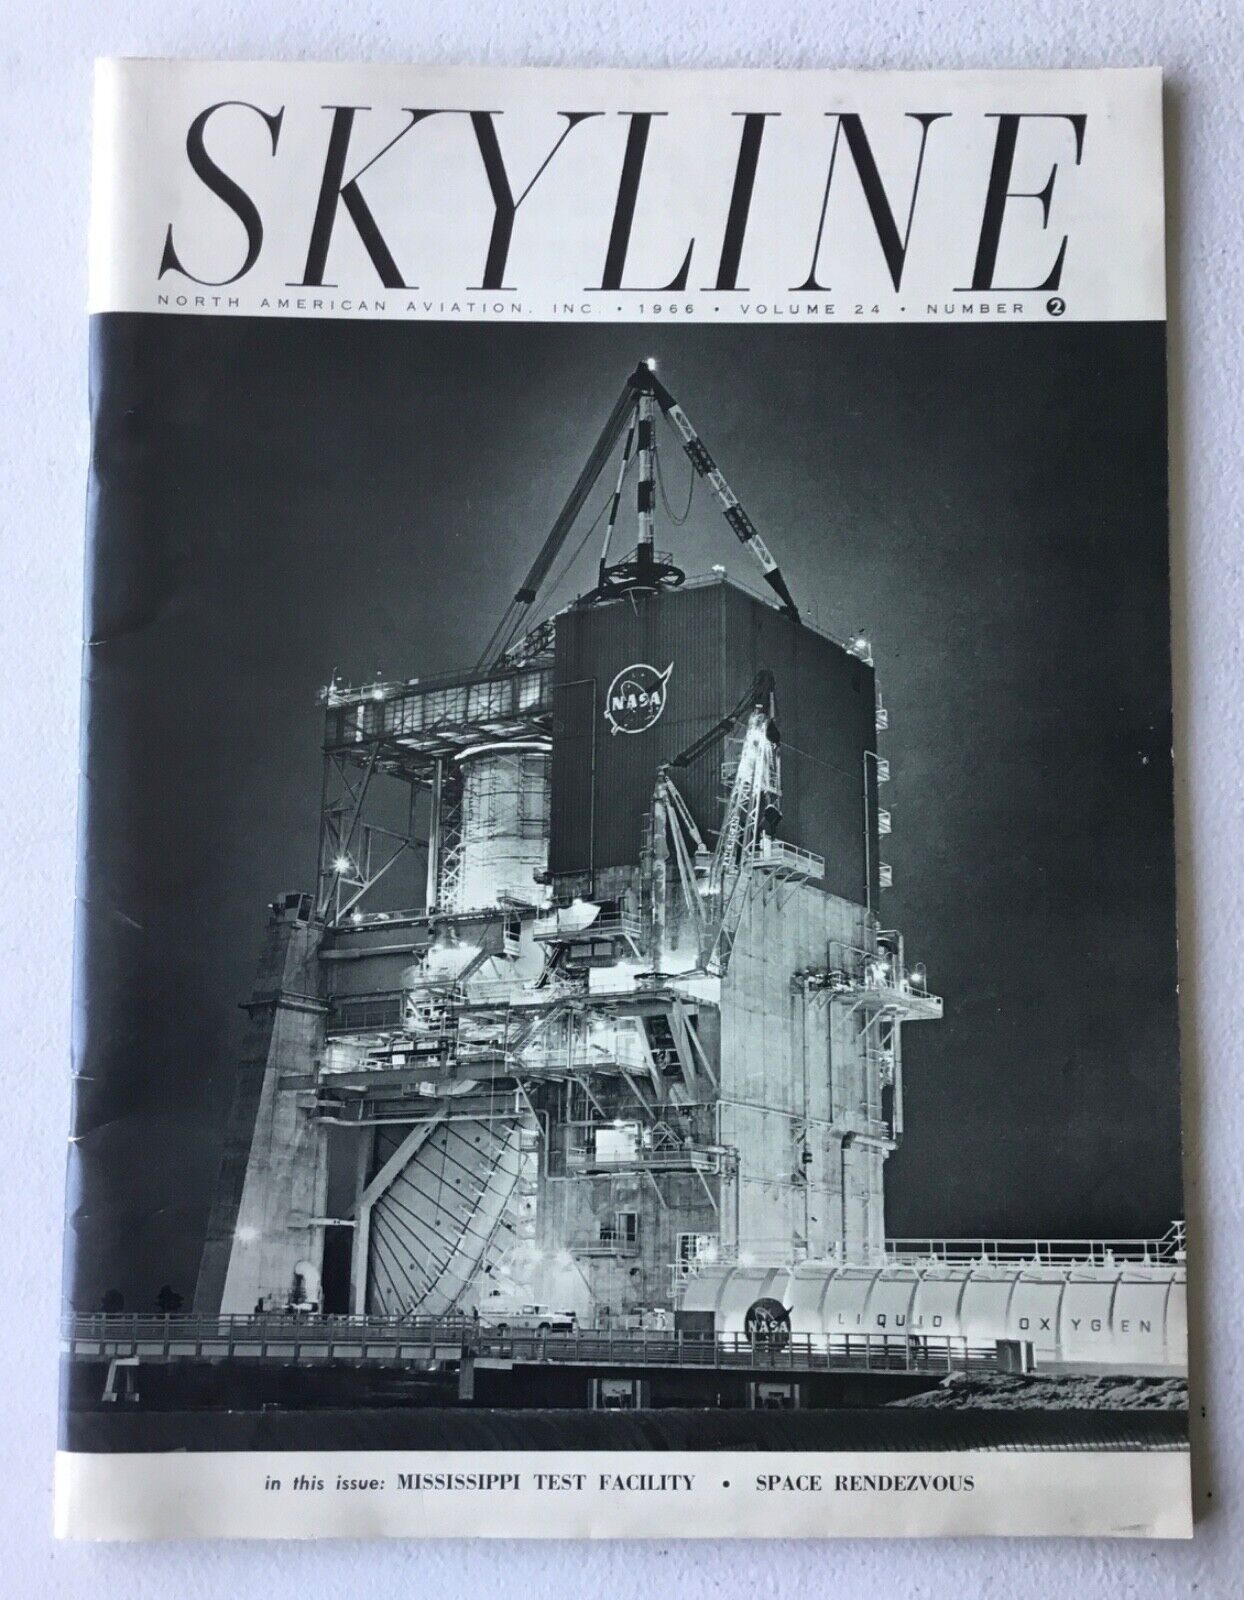 Rare 1966 SKYLINE Magazine North American Aviation Vol 24 No 2 NASA Test Facilit